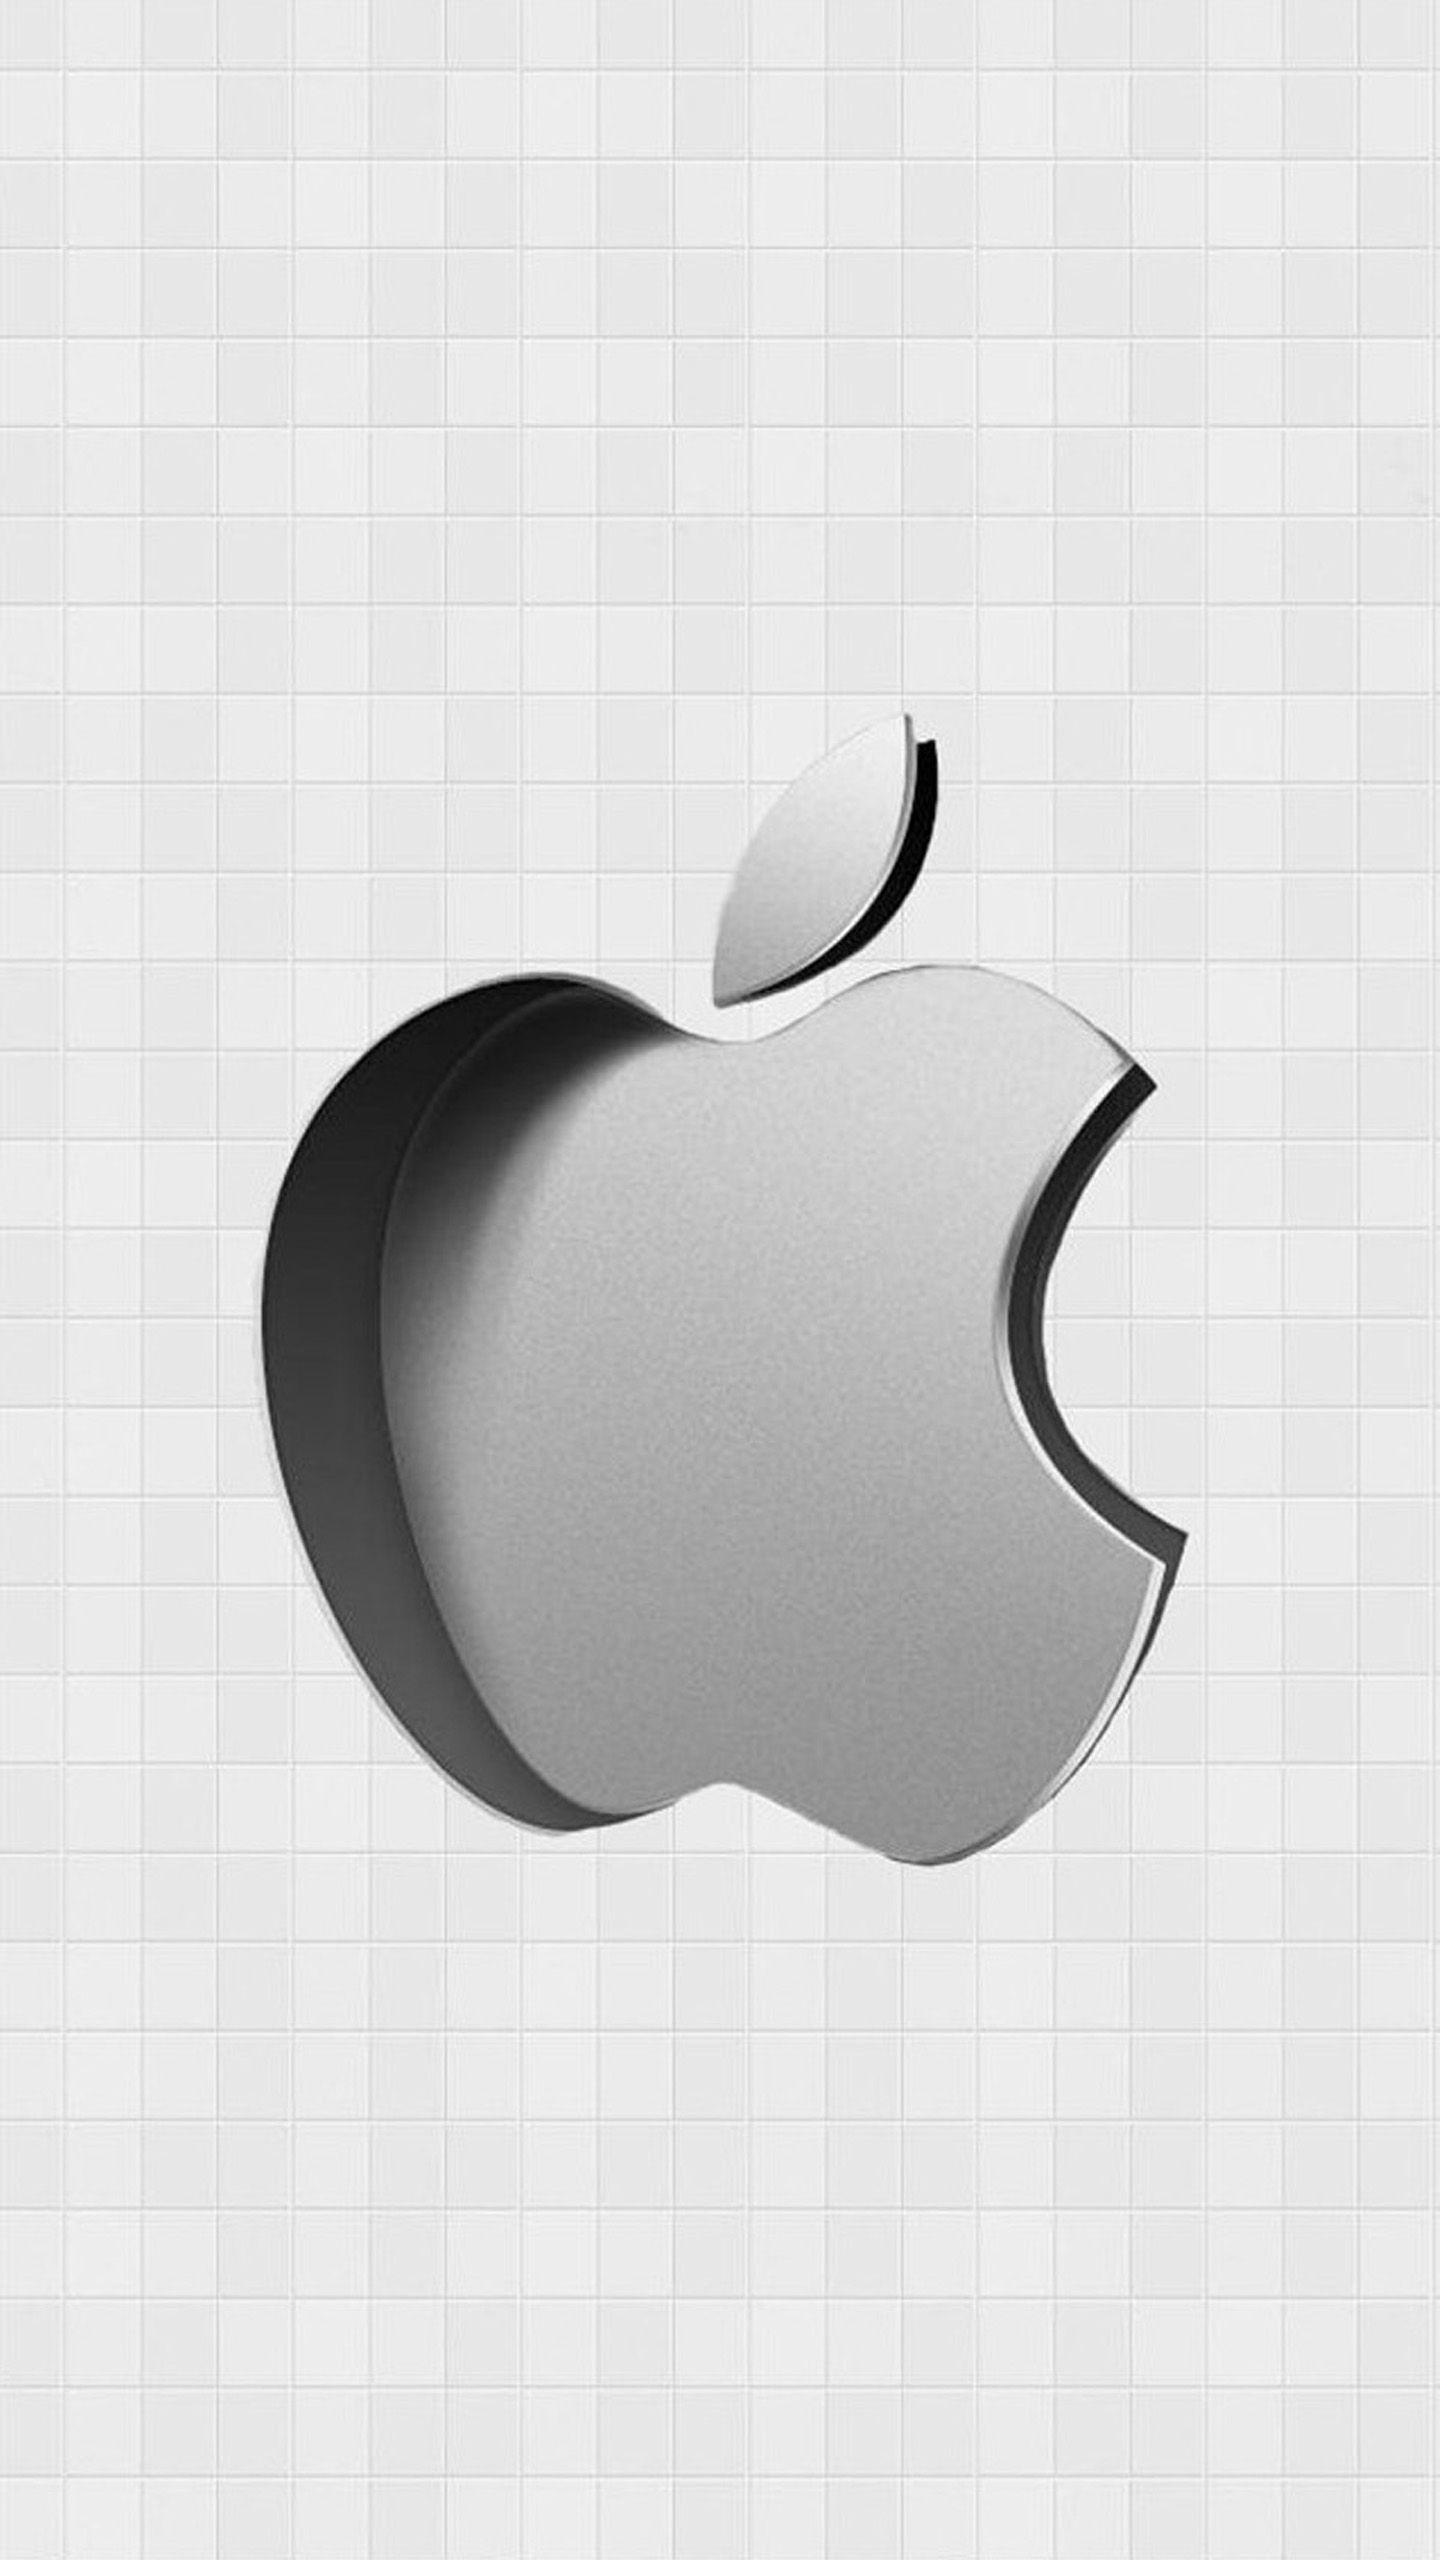 Silver Apple Logo - Silver Apple logo Galaxy S6 Wallpaper | Galaxy S6 Wallpapers